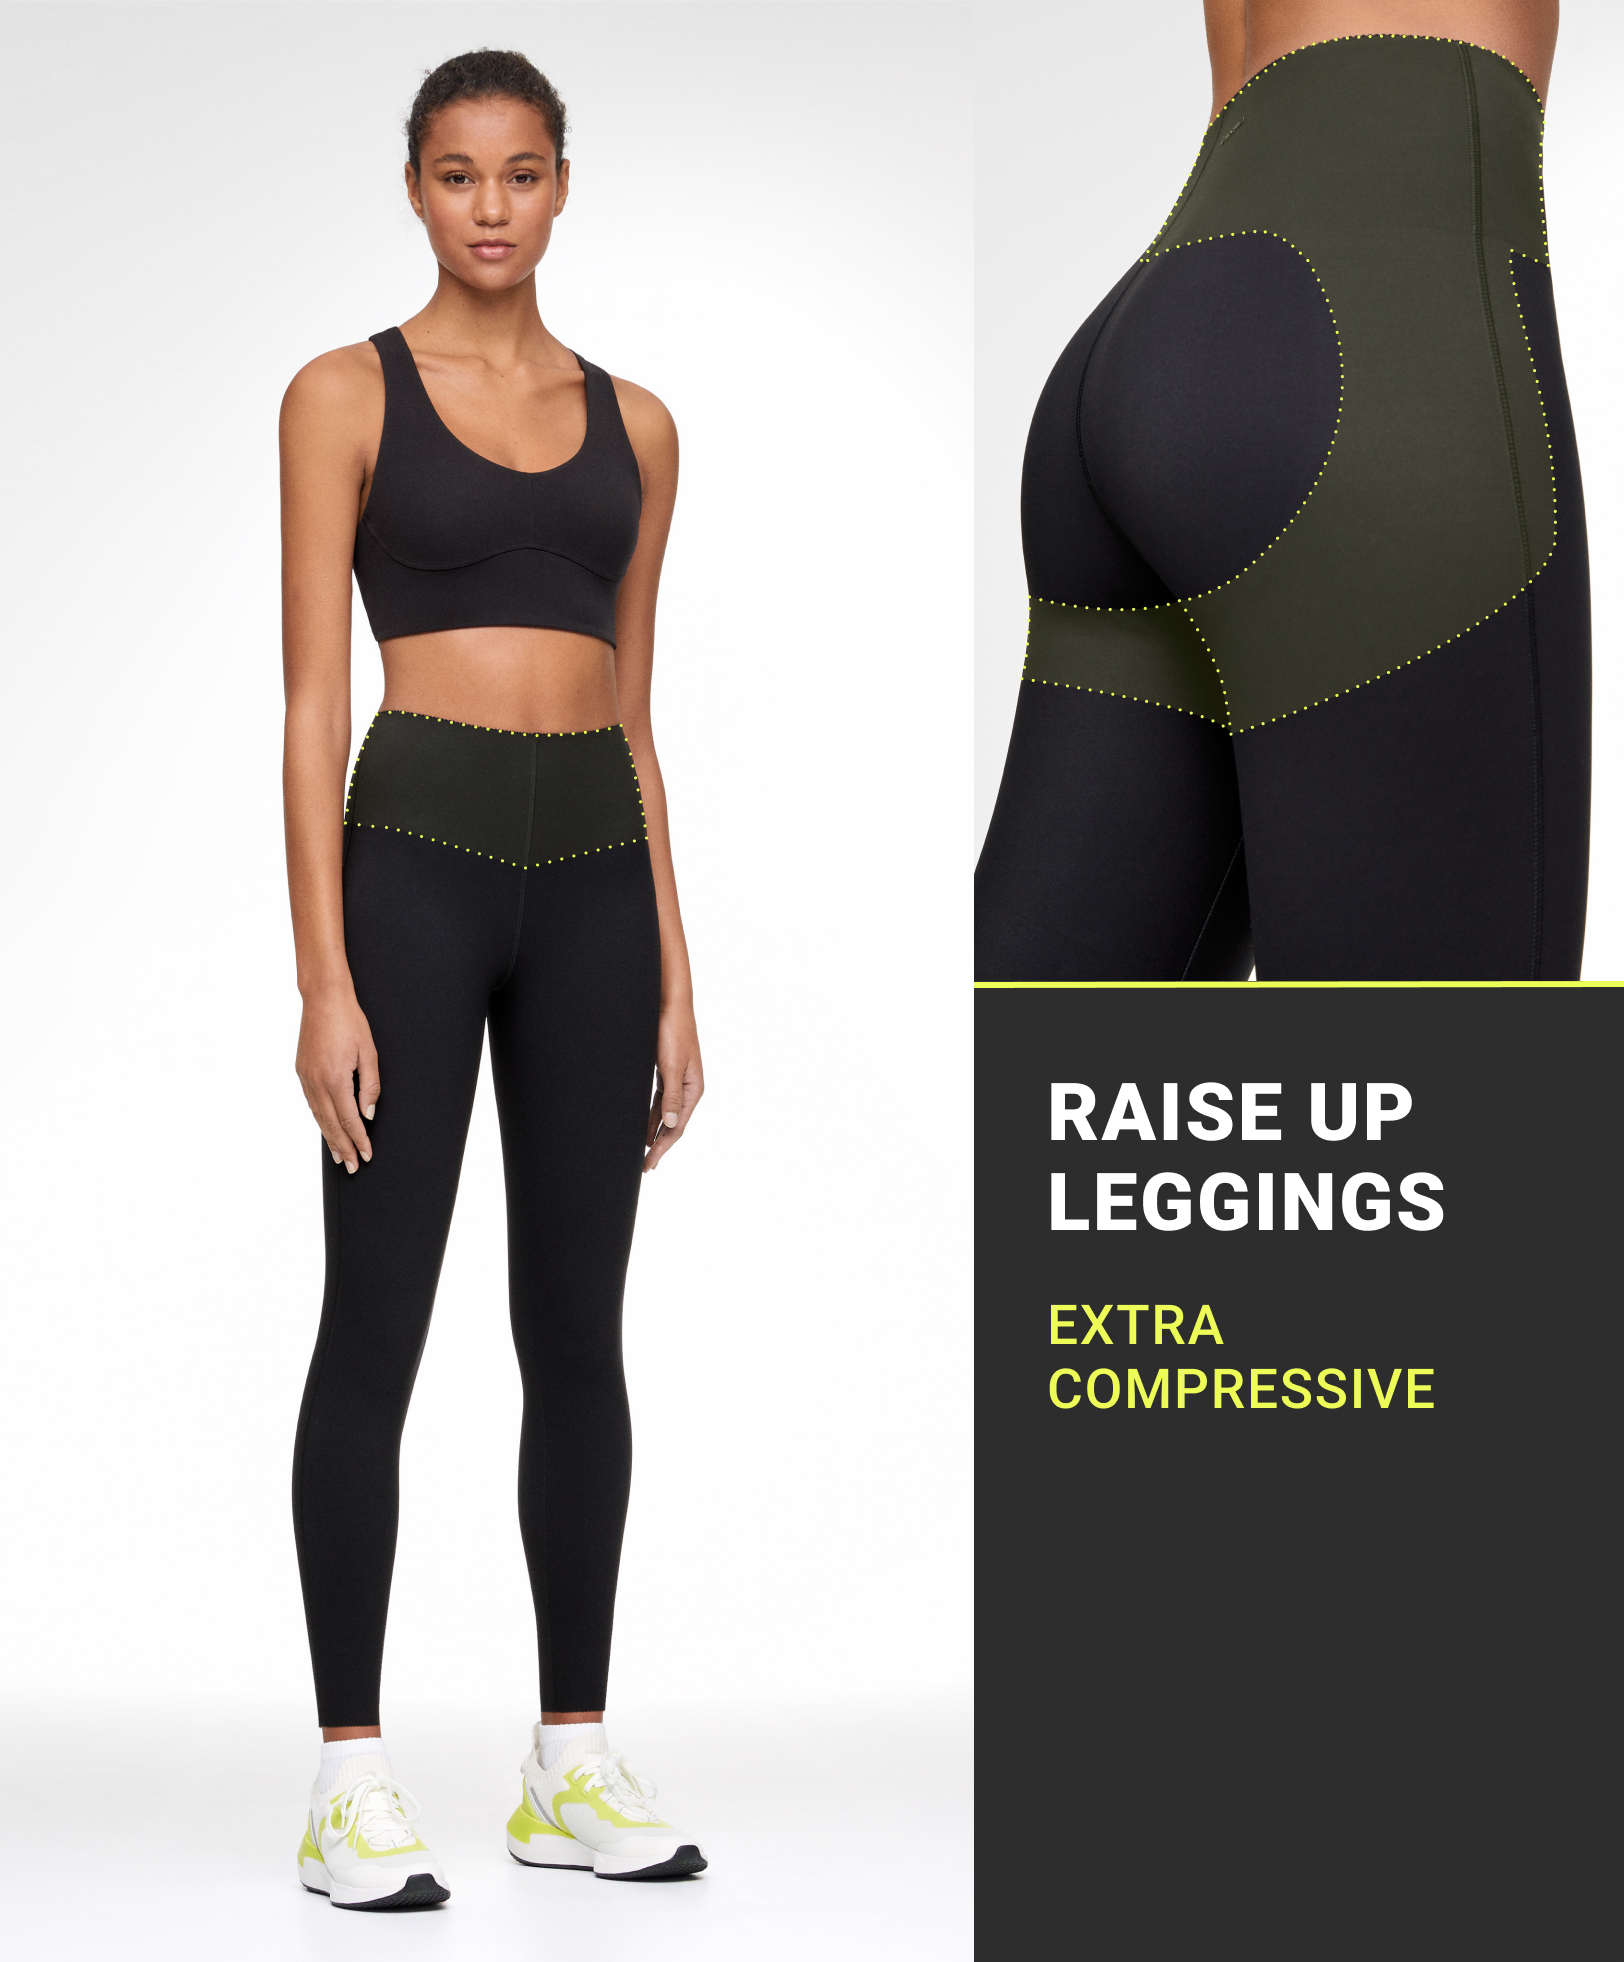 Extra-compressive Raise Up 65cm ankle-length leggings